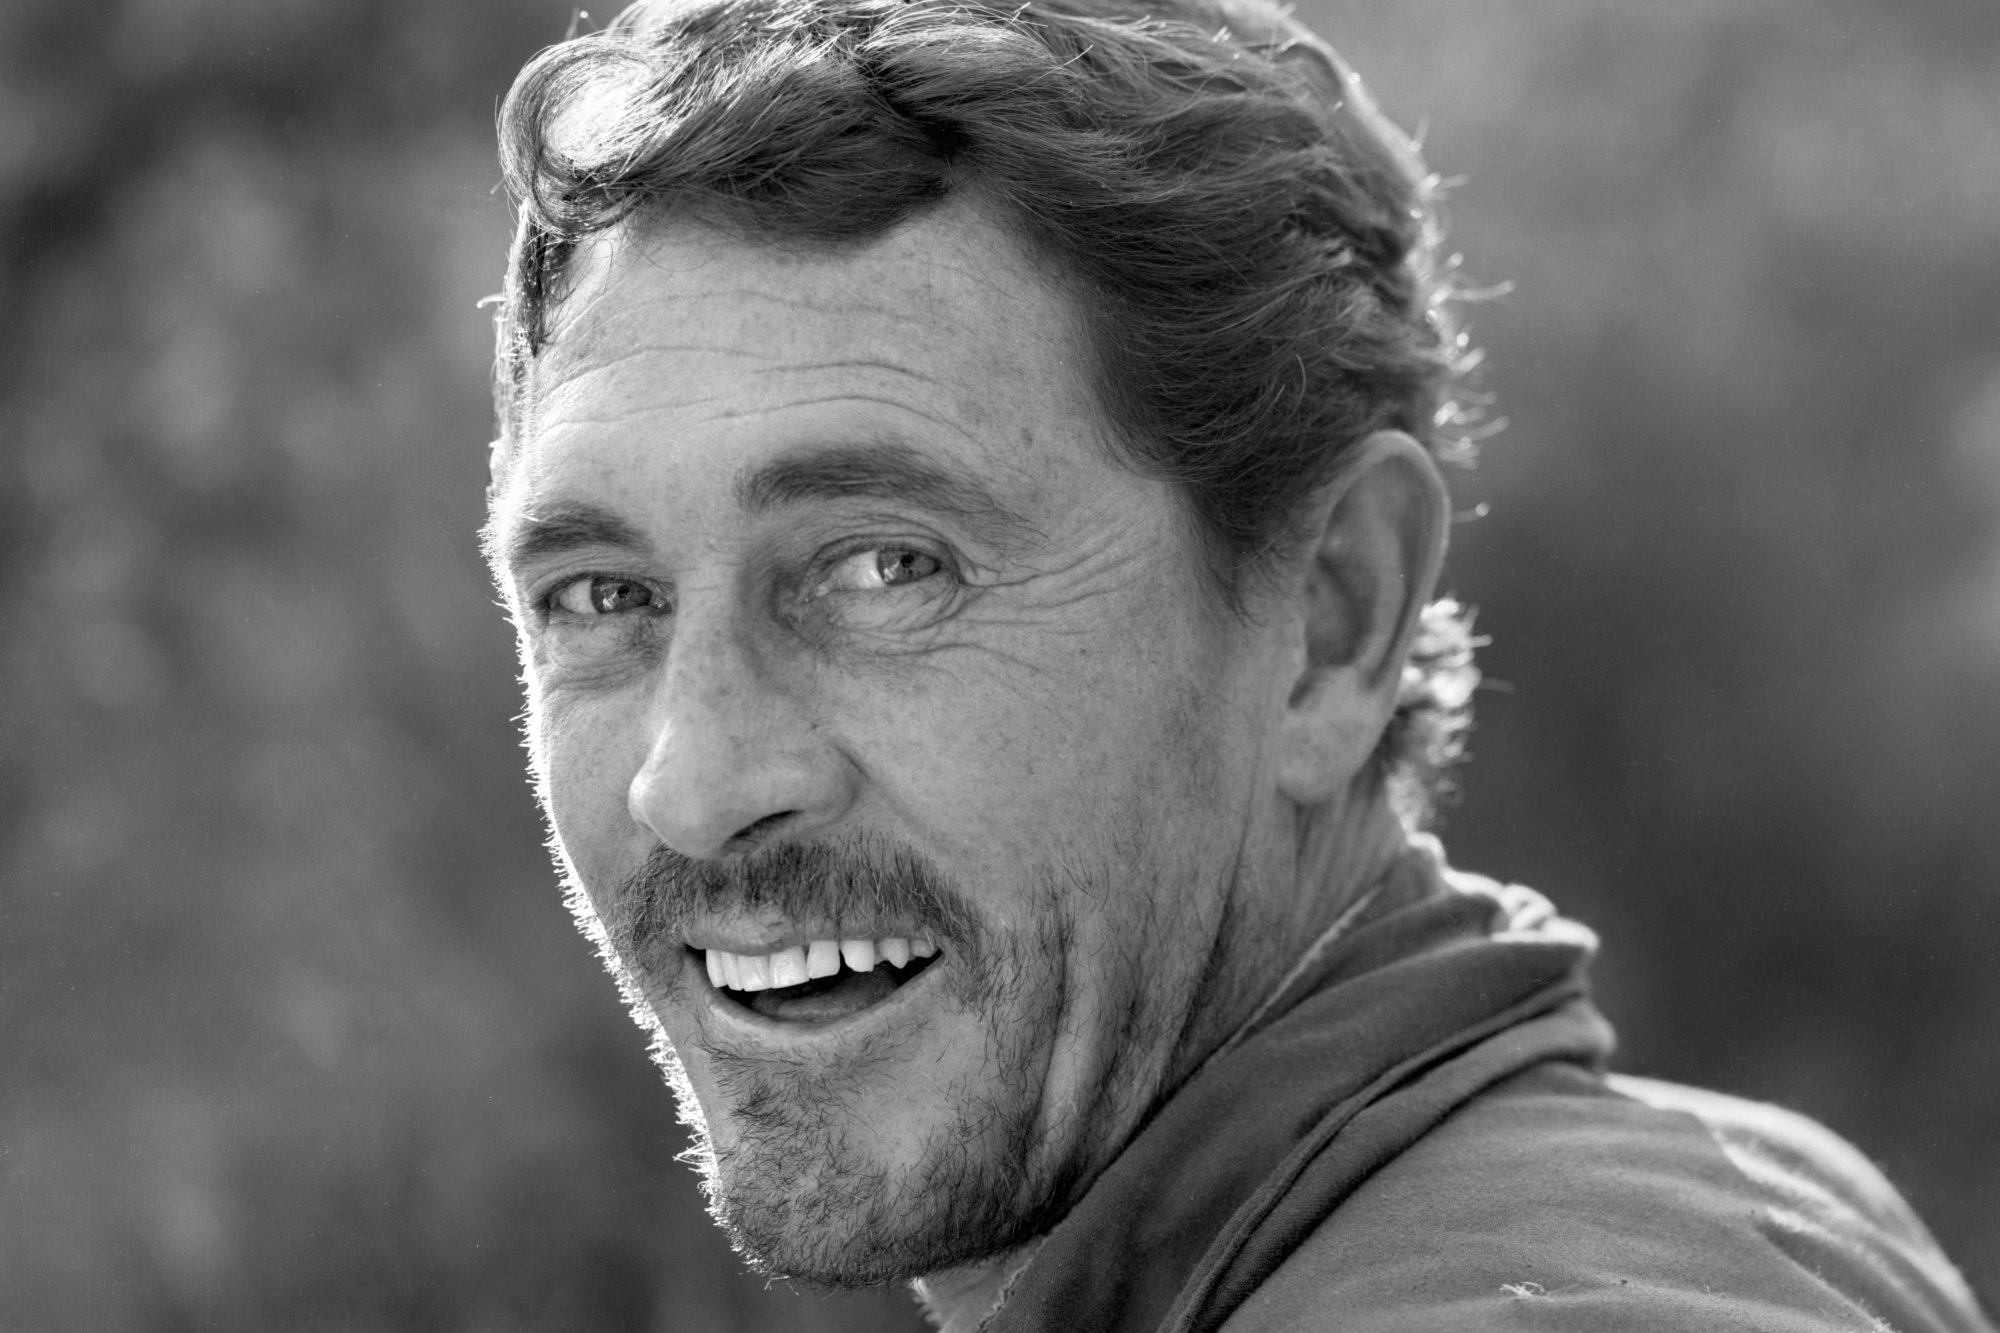 'Gunsmoke' Ken Curtis as Festus Haggen smiling in a black-and-white portrait shot